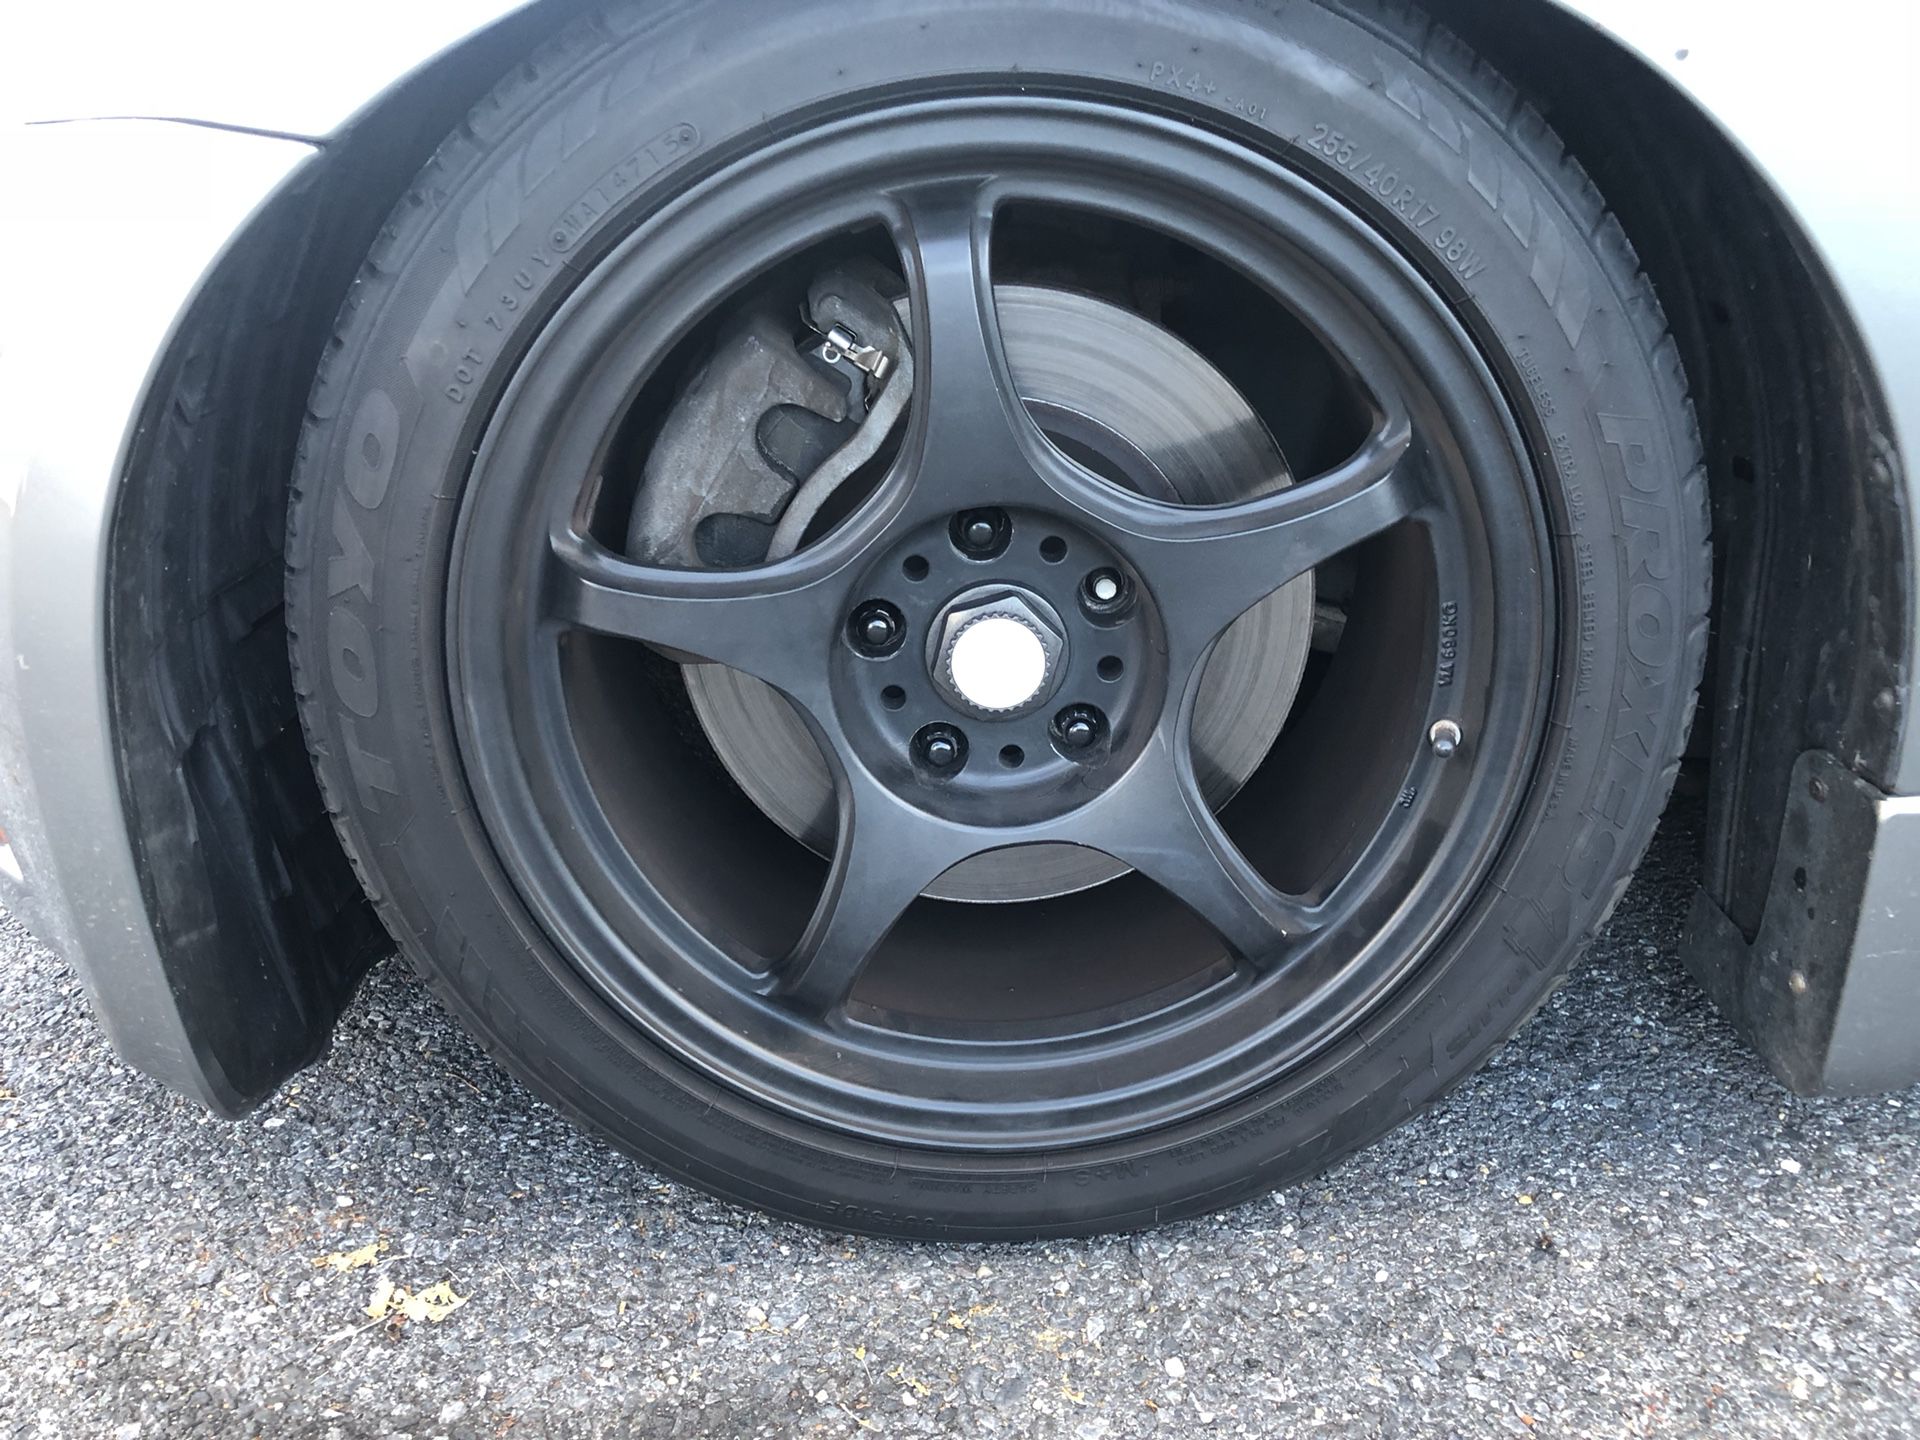 5 spoke black wheels